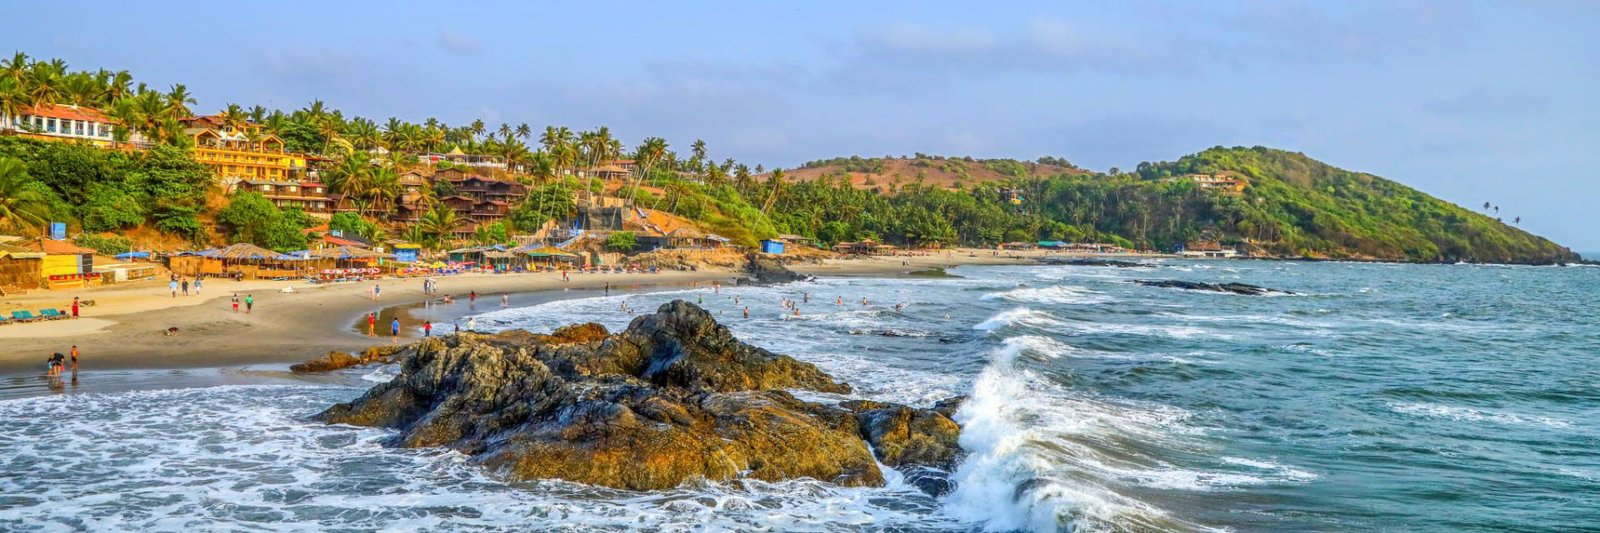 A Photographers Guide to Goa Tourism